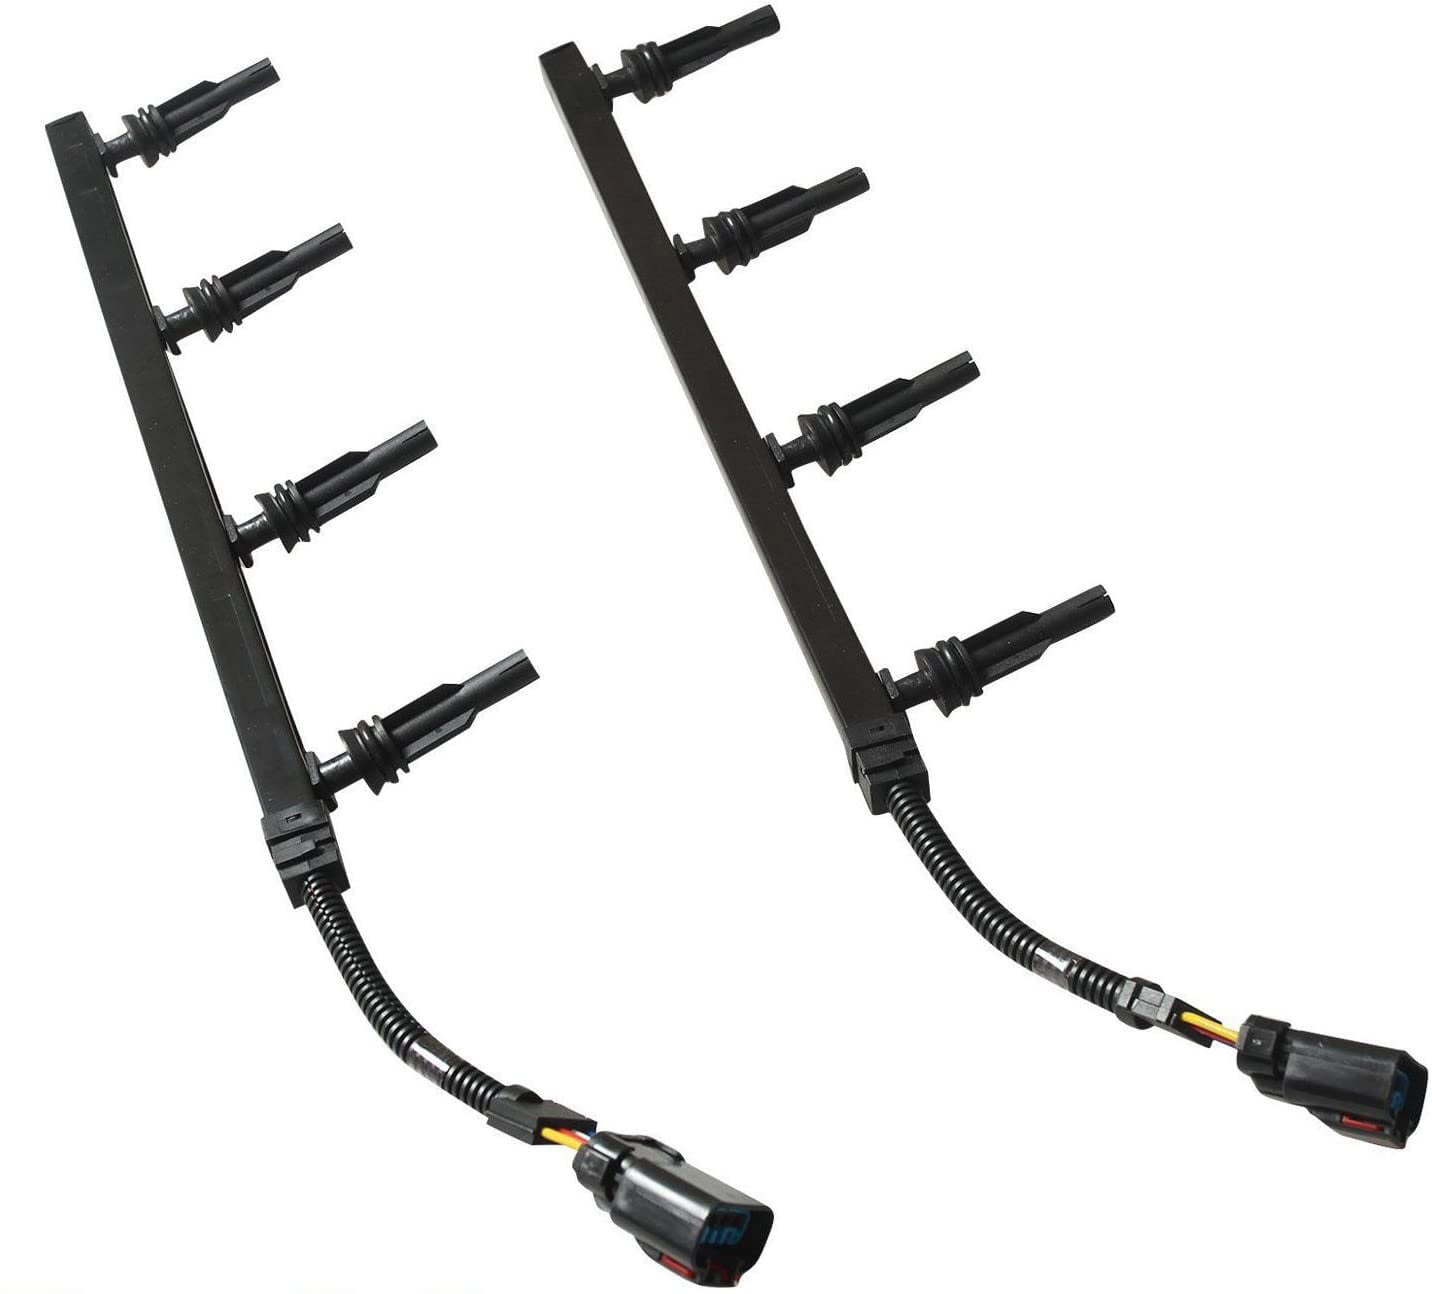 6.0l Glow Plug Wire Wiring Harness Set Right & Left Fit for 2003 Ford 6.0L Diesel Super Duty F250 F350 F450 F550 OEM 3C3Z-12A690-AA 3C3Z12A690AA 12A690 